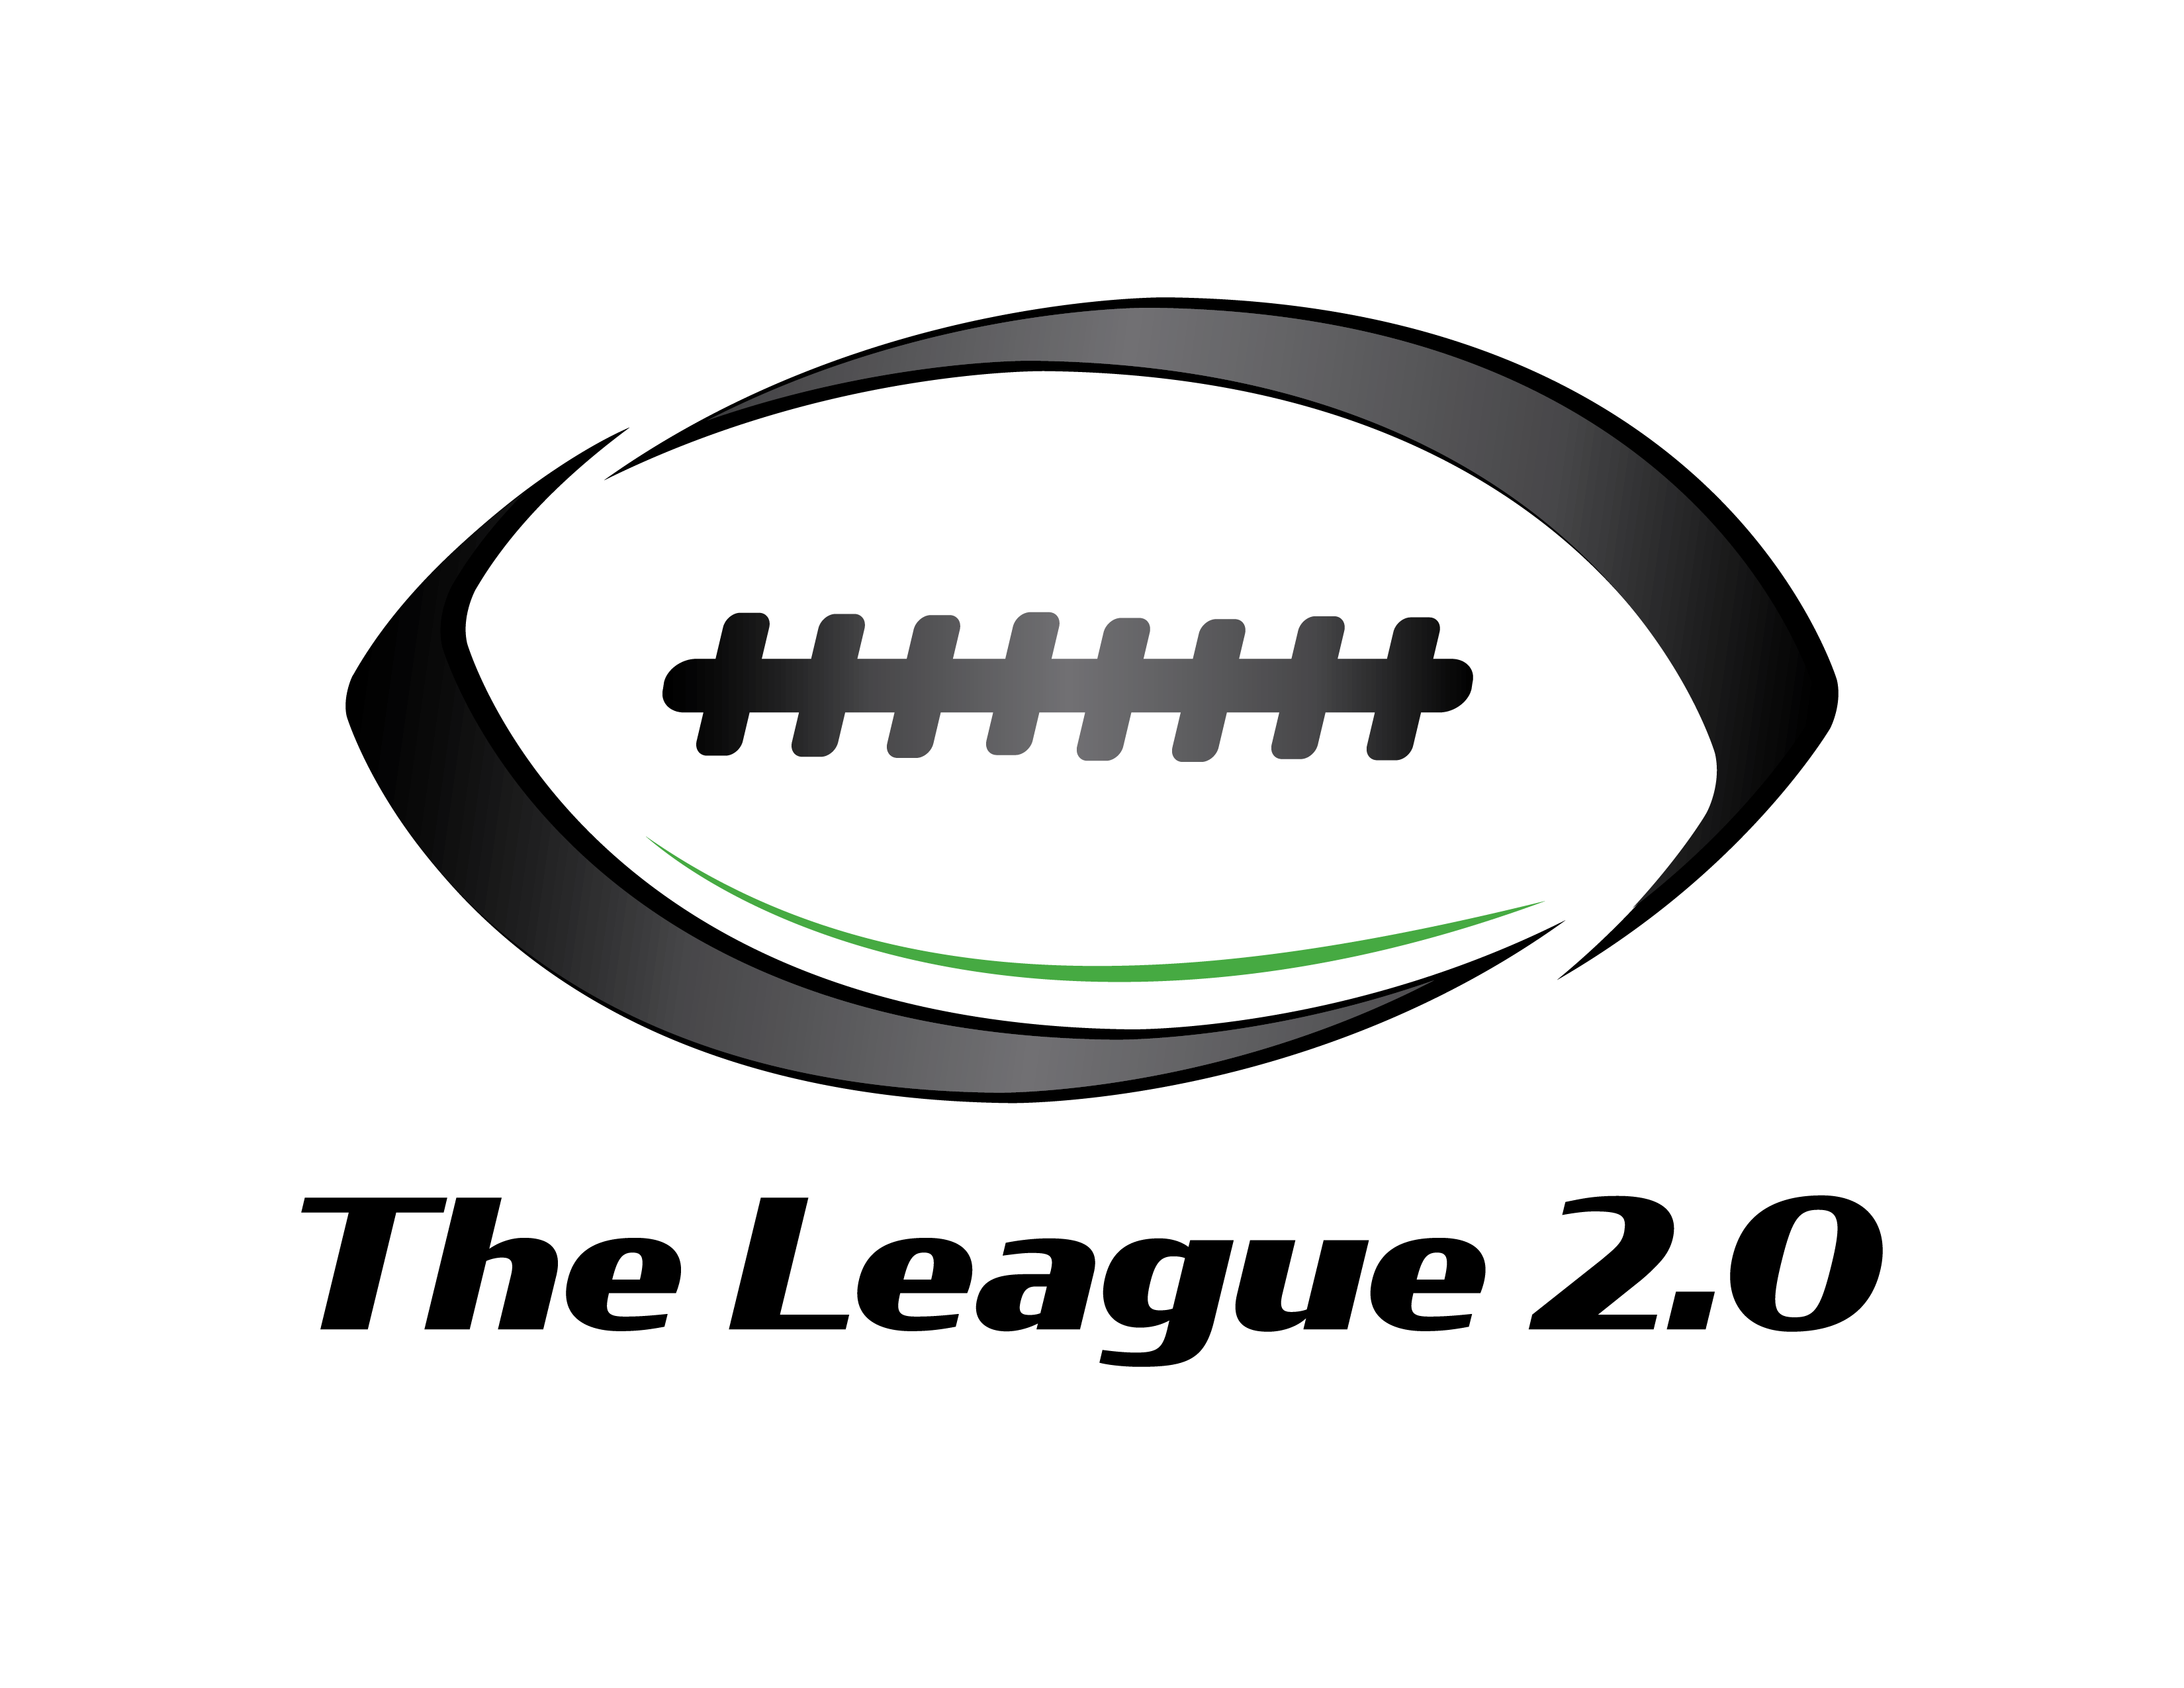 League 2.0 (Memoir Football League Emblem)